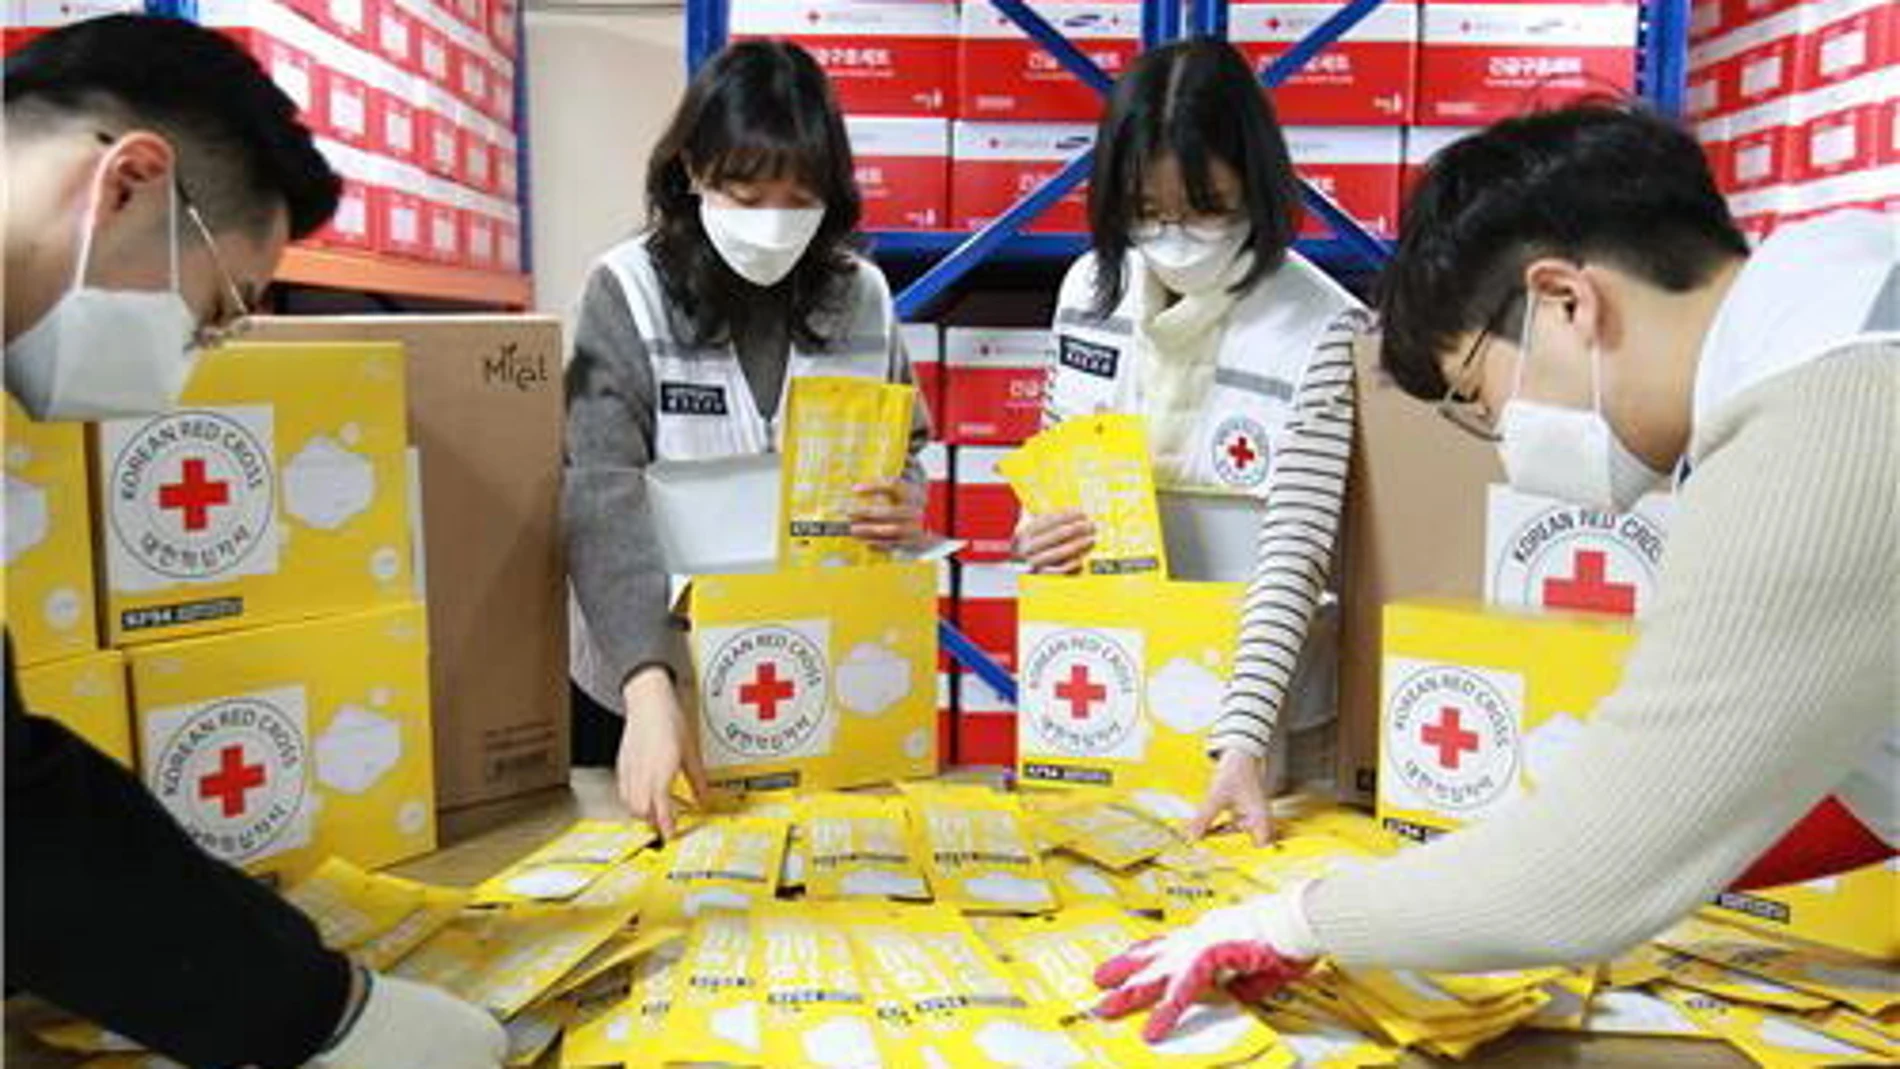 Masks for needy provided by Korean Red Cross